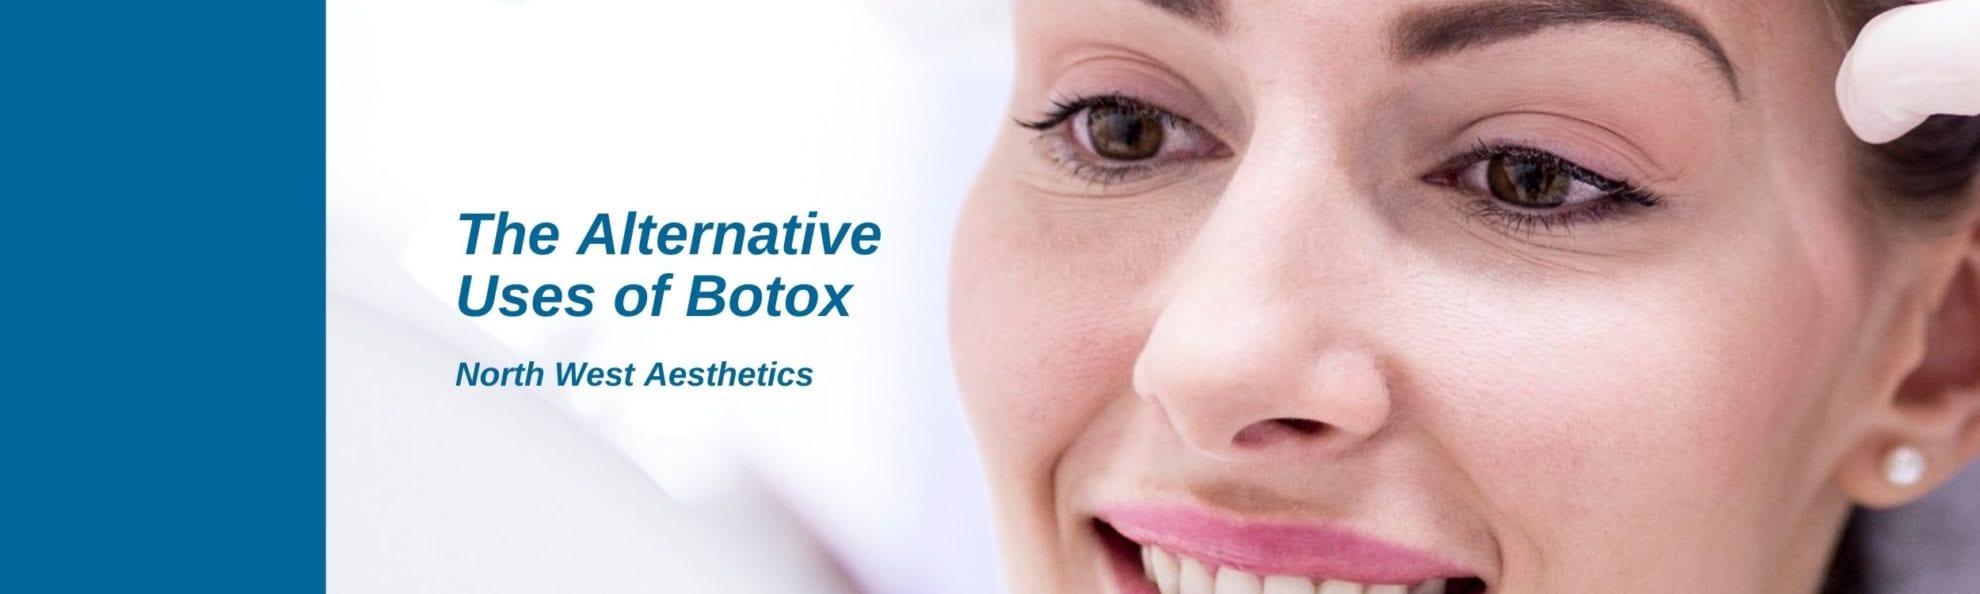 The Alternative Uses of Botox